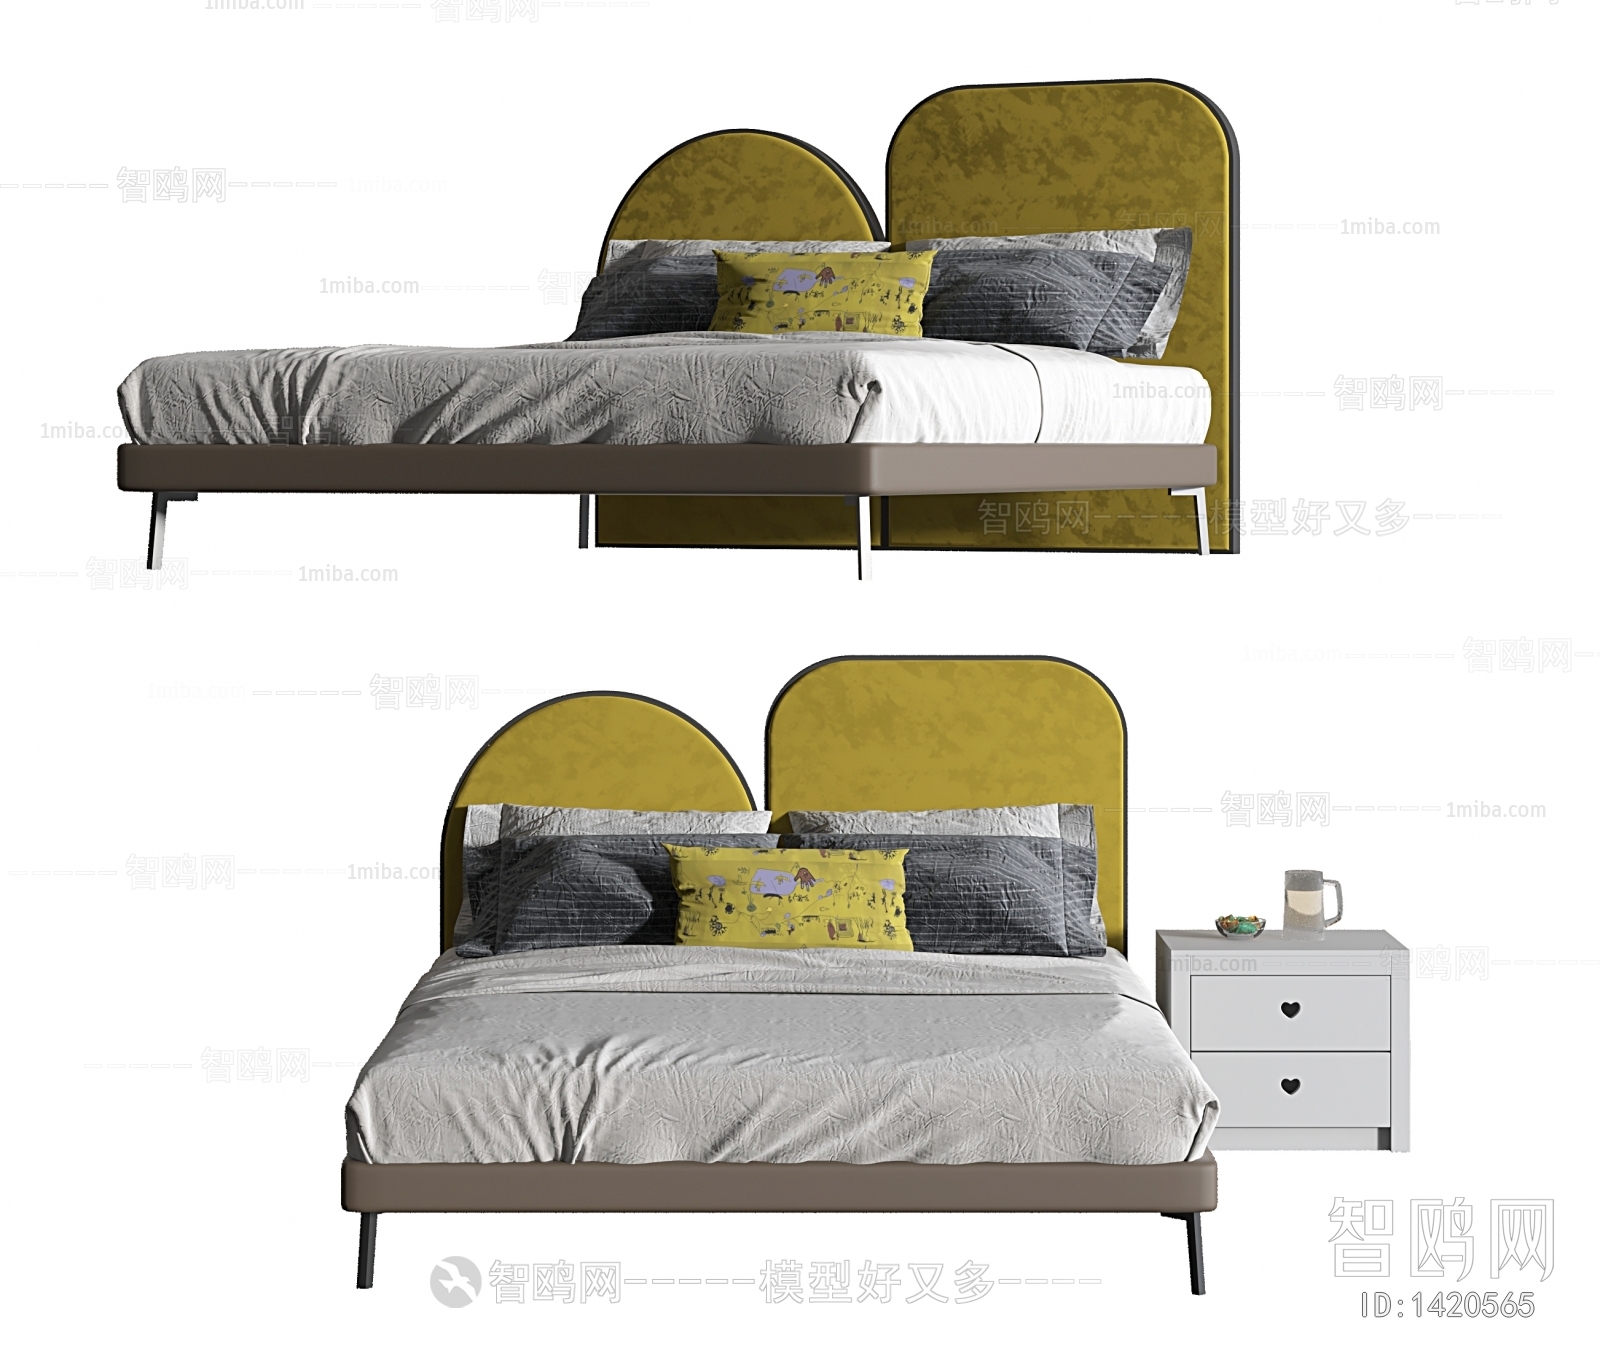 Retro Style Double Bed